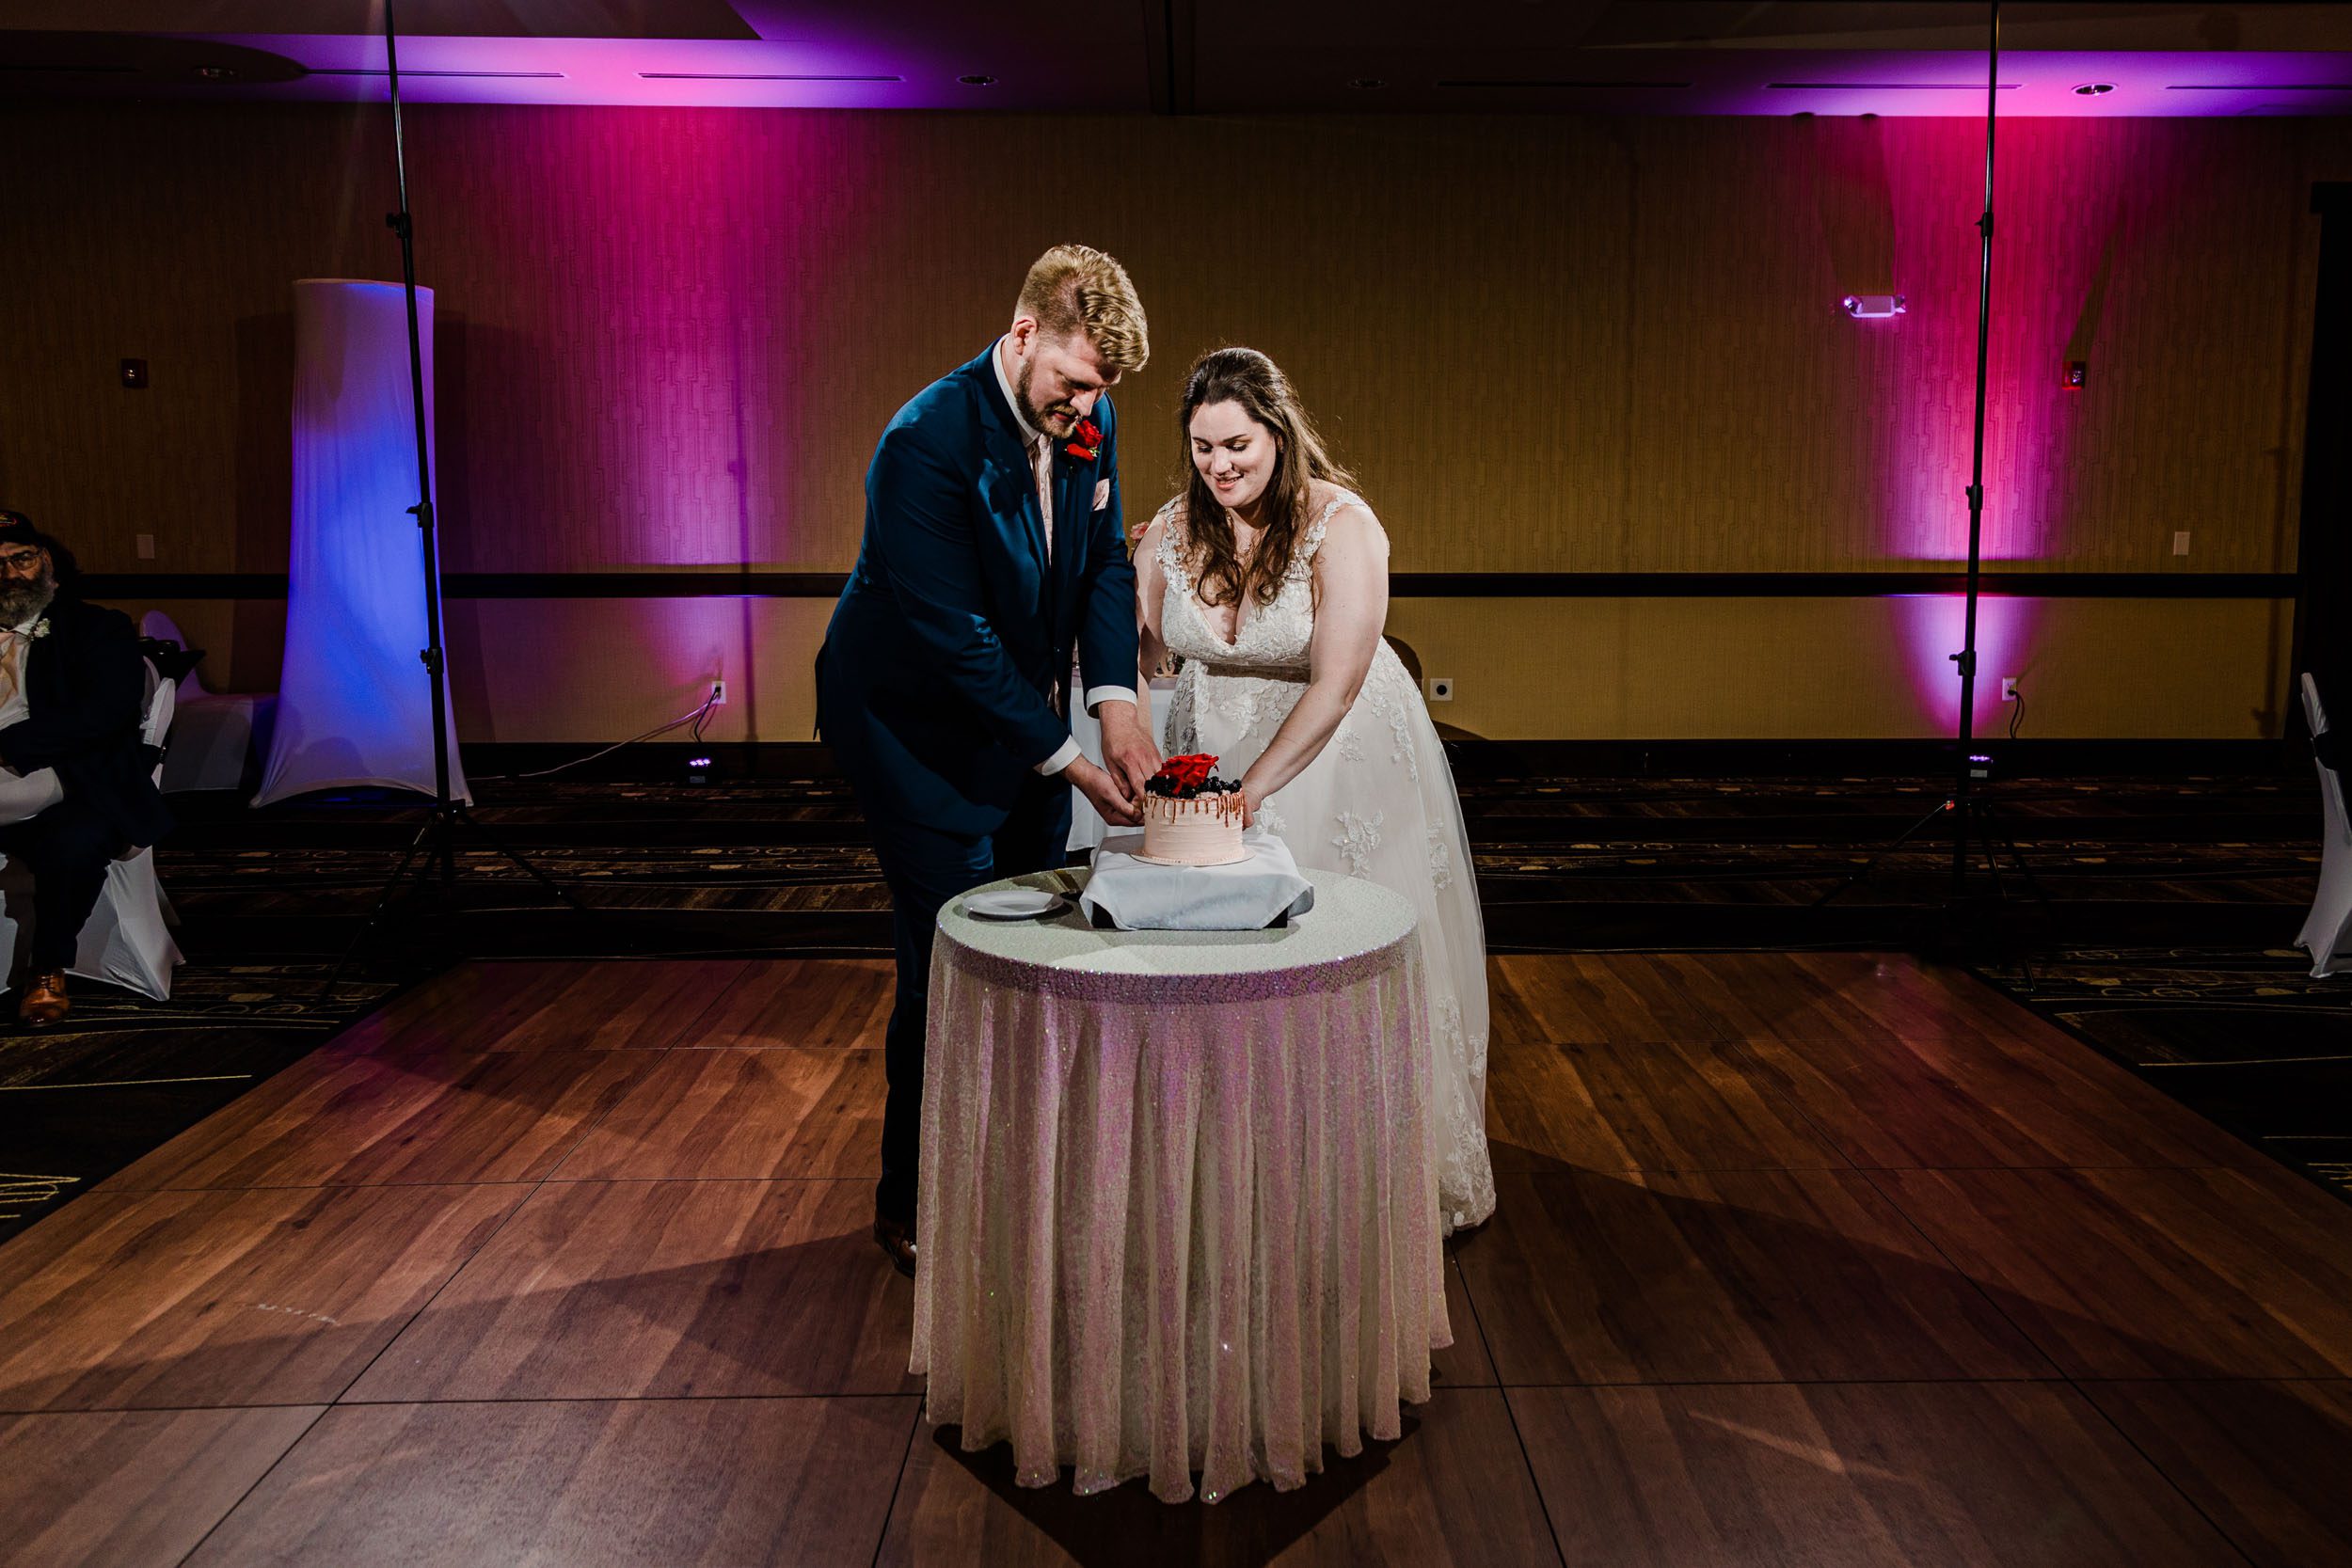 Cake cutting ballroom wedding